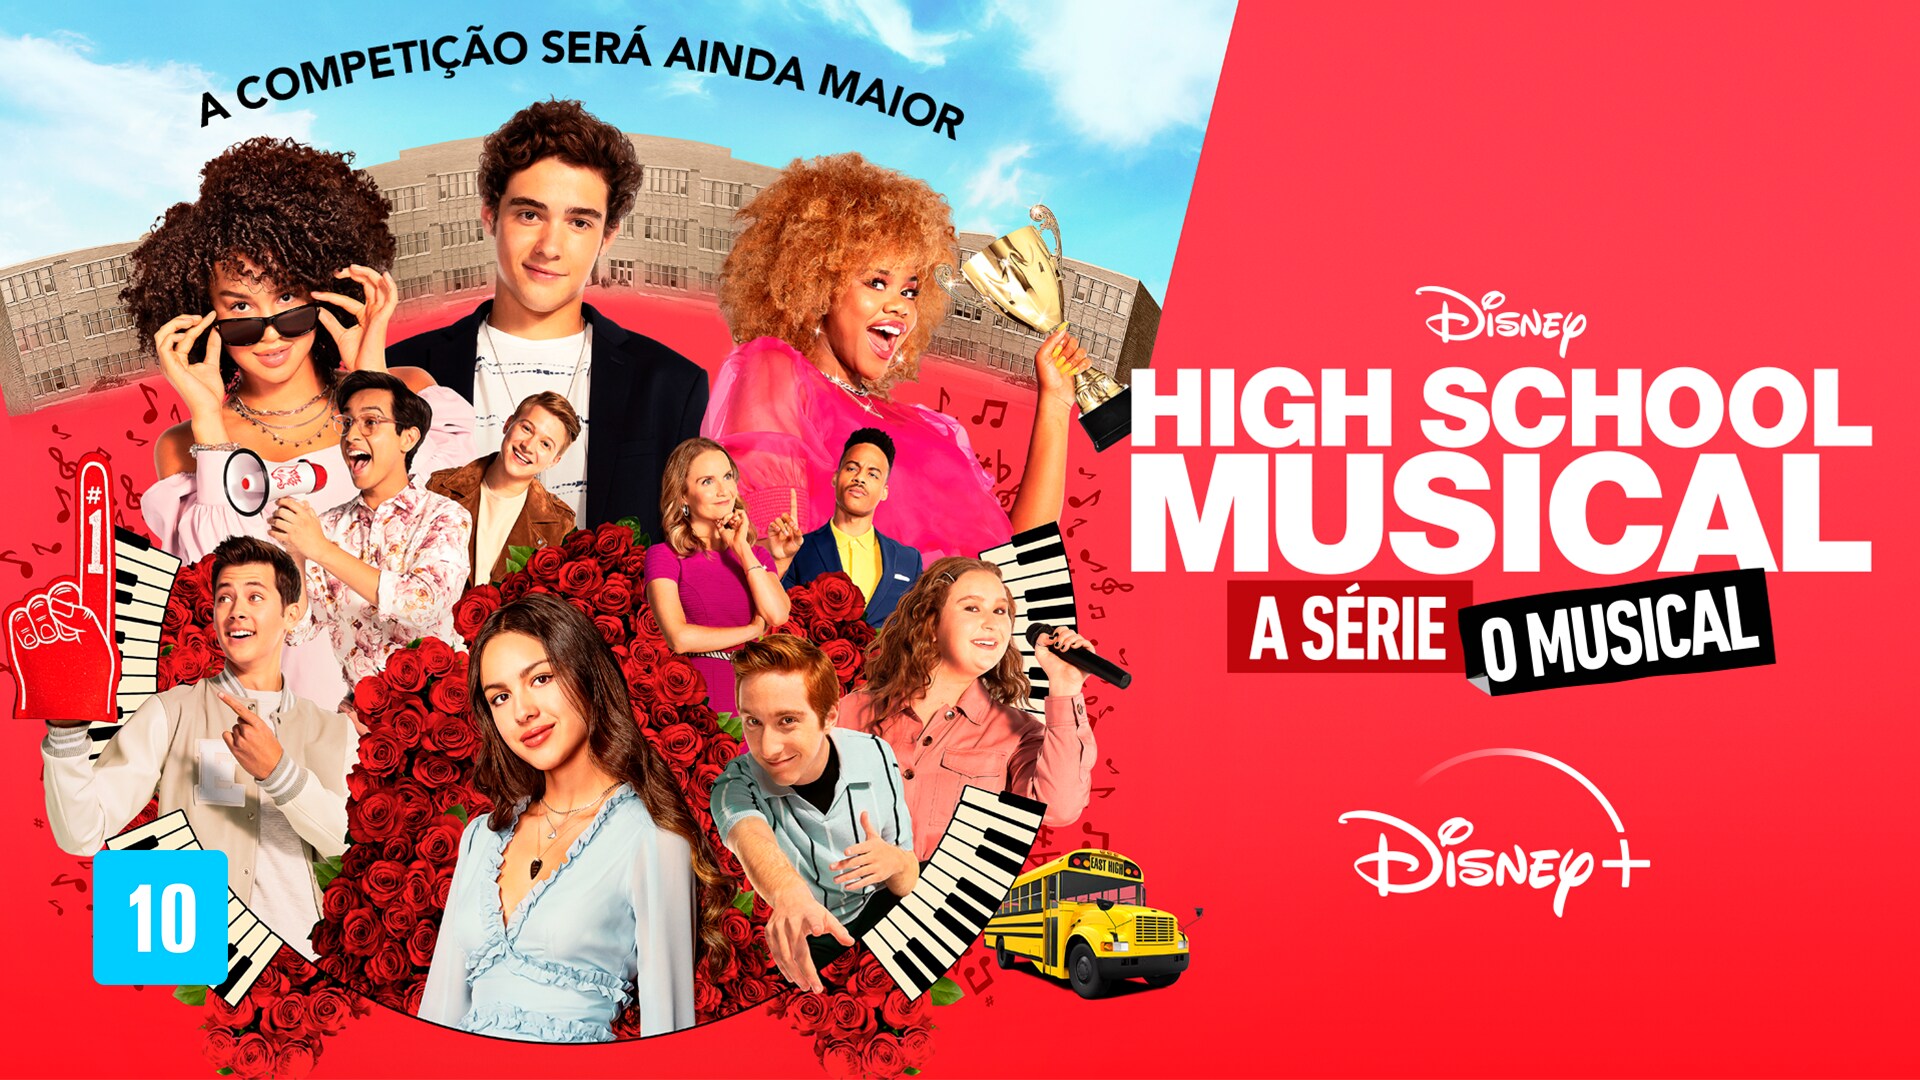 High School Musical: A Série: O Musical | Disponível no Disney+ a partir de 17 de novembro